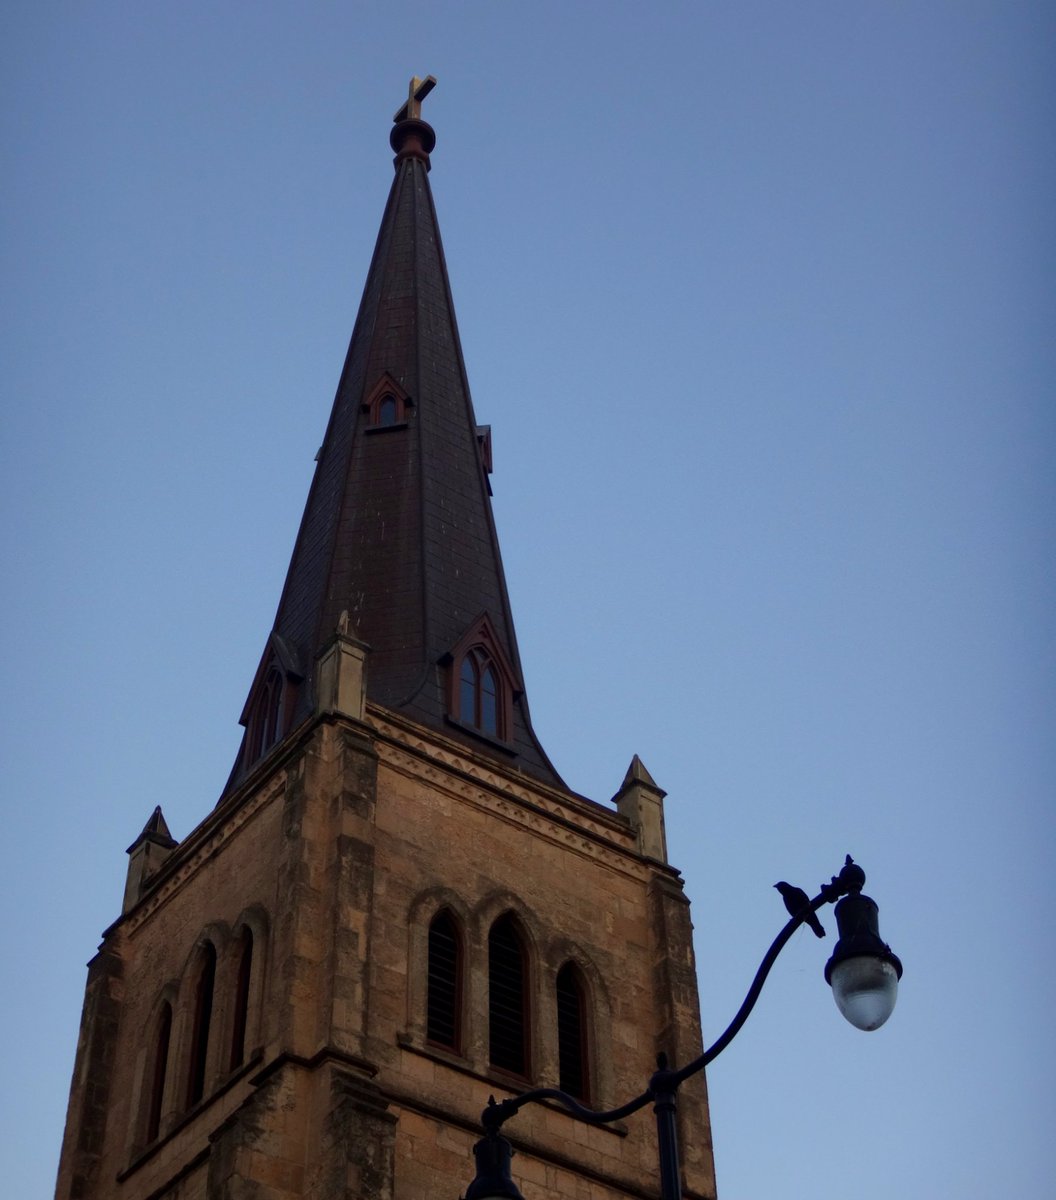 Church and crow. #birds #wildlifephotography #WildlifeWednesday #WildlifeInTheCity